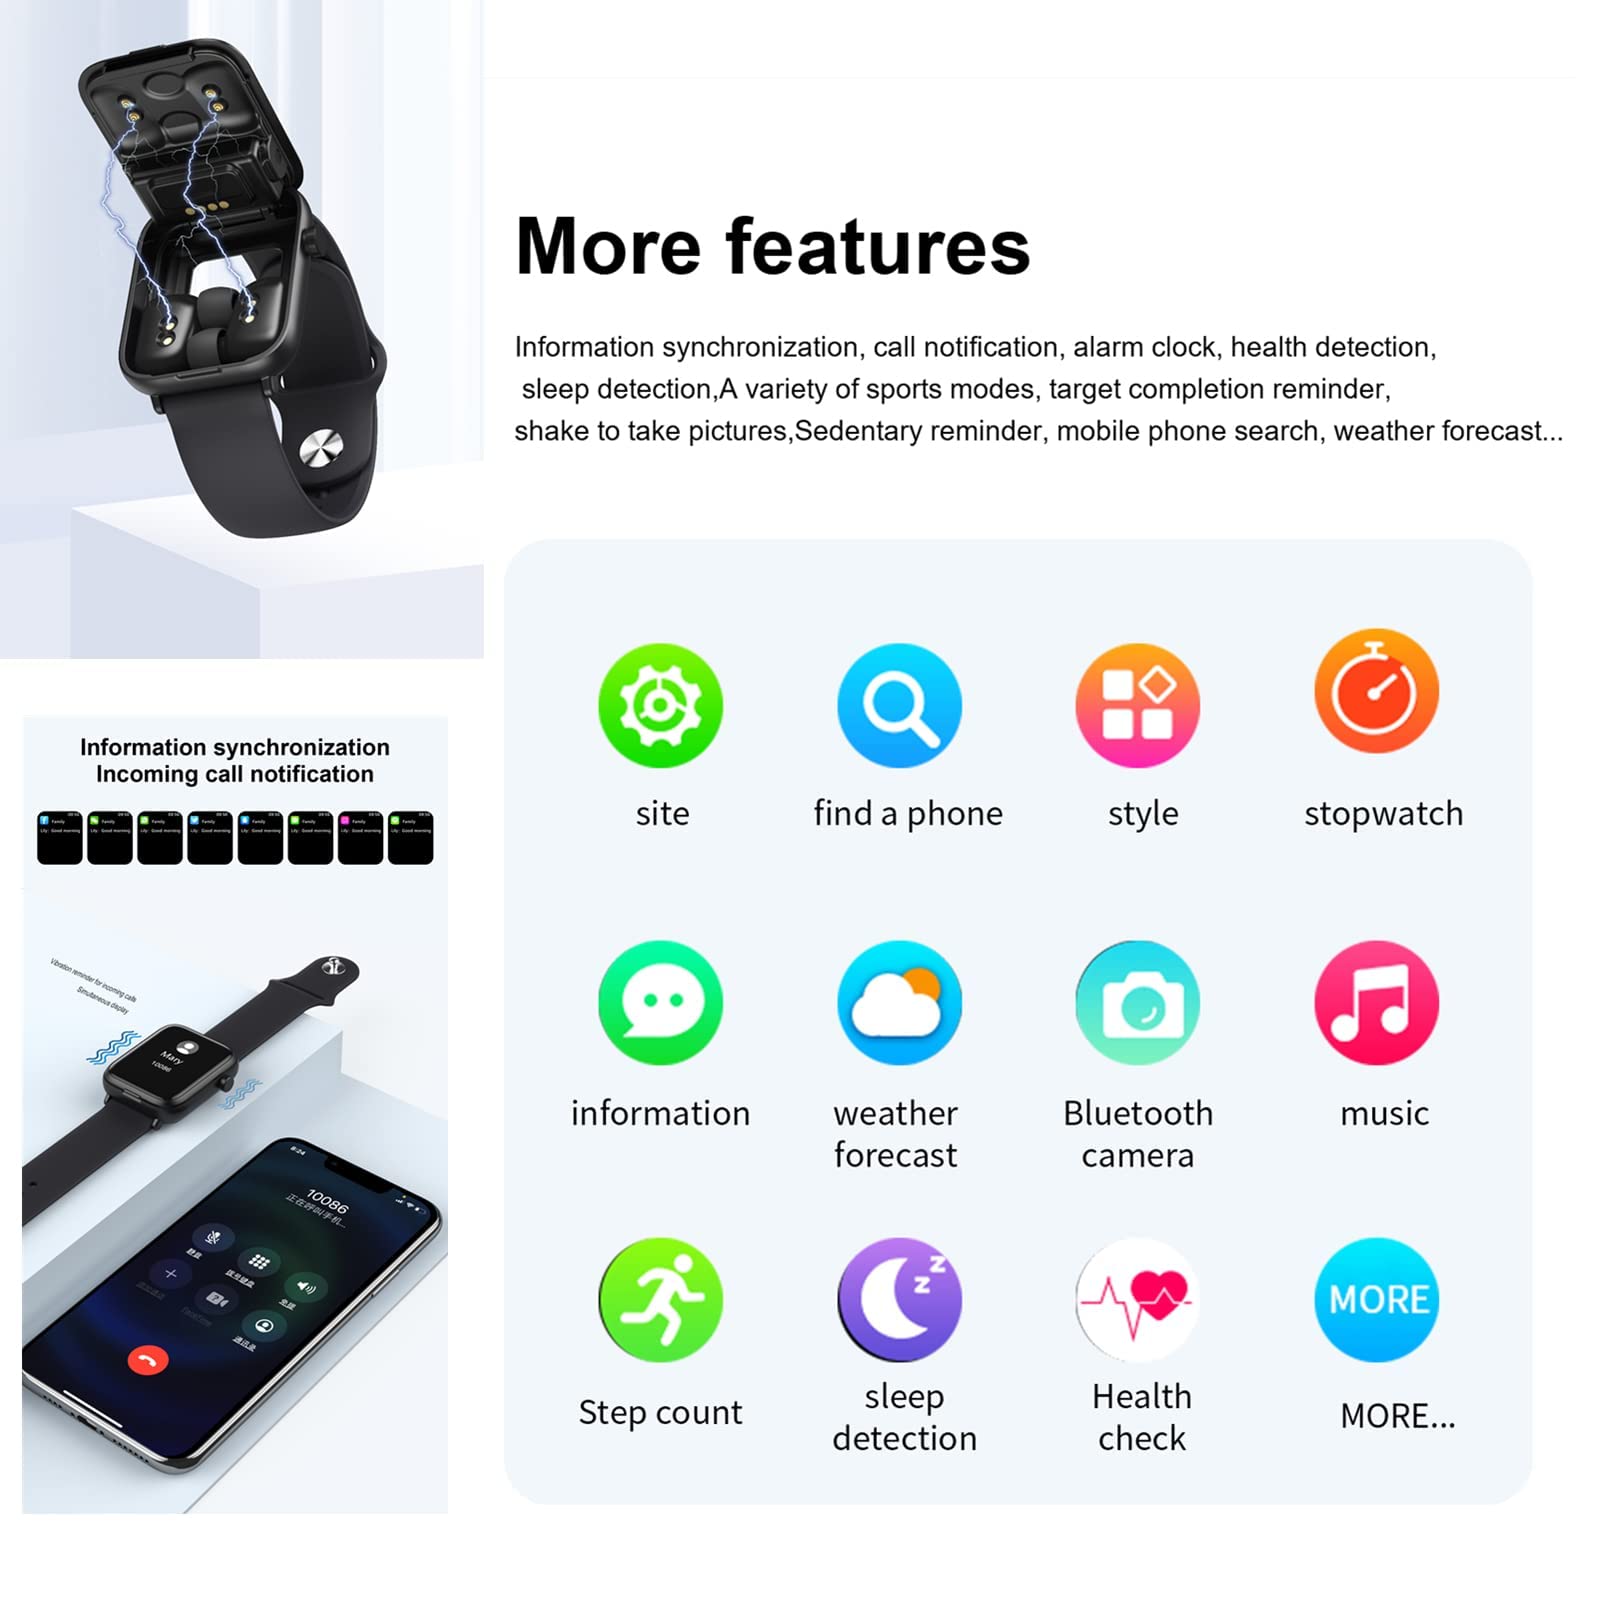 X8 2 in 1 Smart Watch with Earbuds Smartwatch TWS Bluetooth Earphone Heart Rate Blood Pressure Monitor Sport Watch Fitness Tracker (X8-Black)